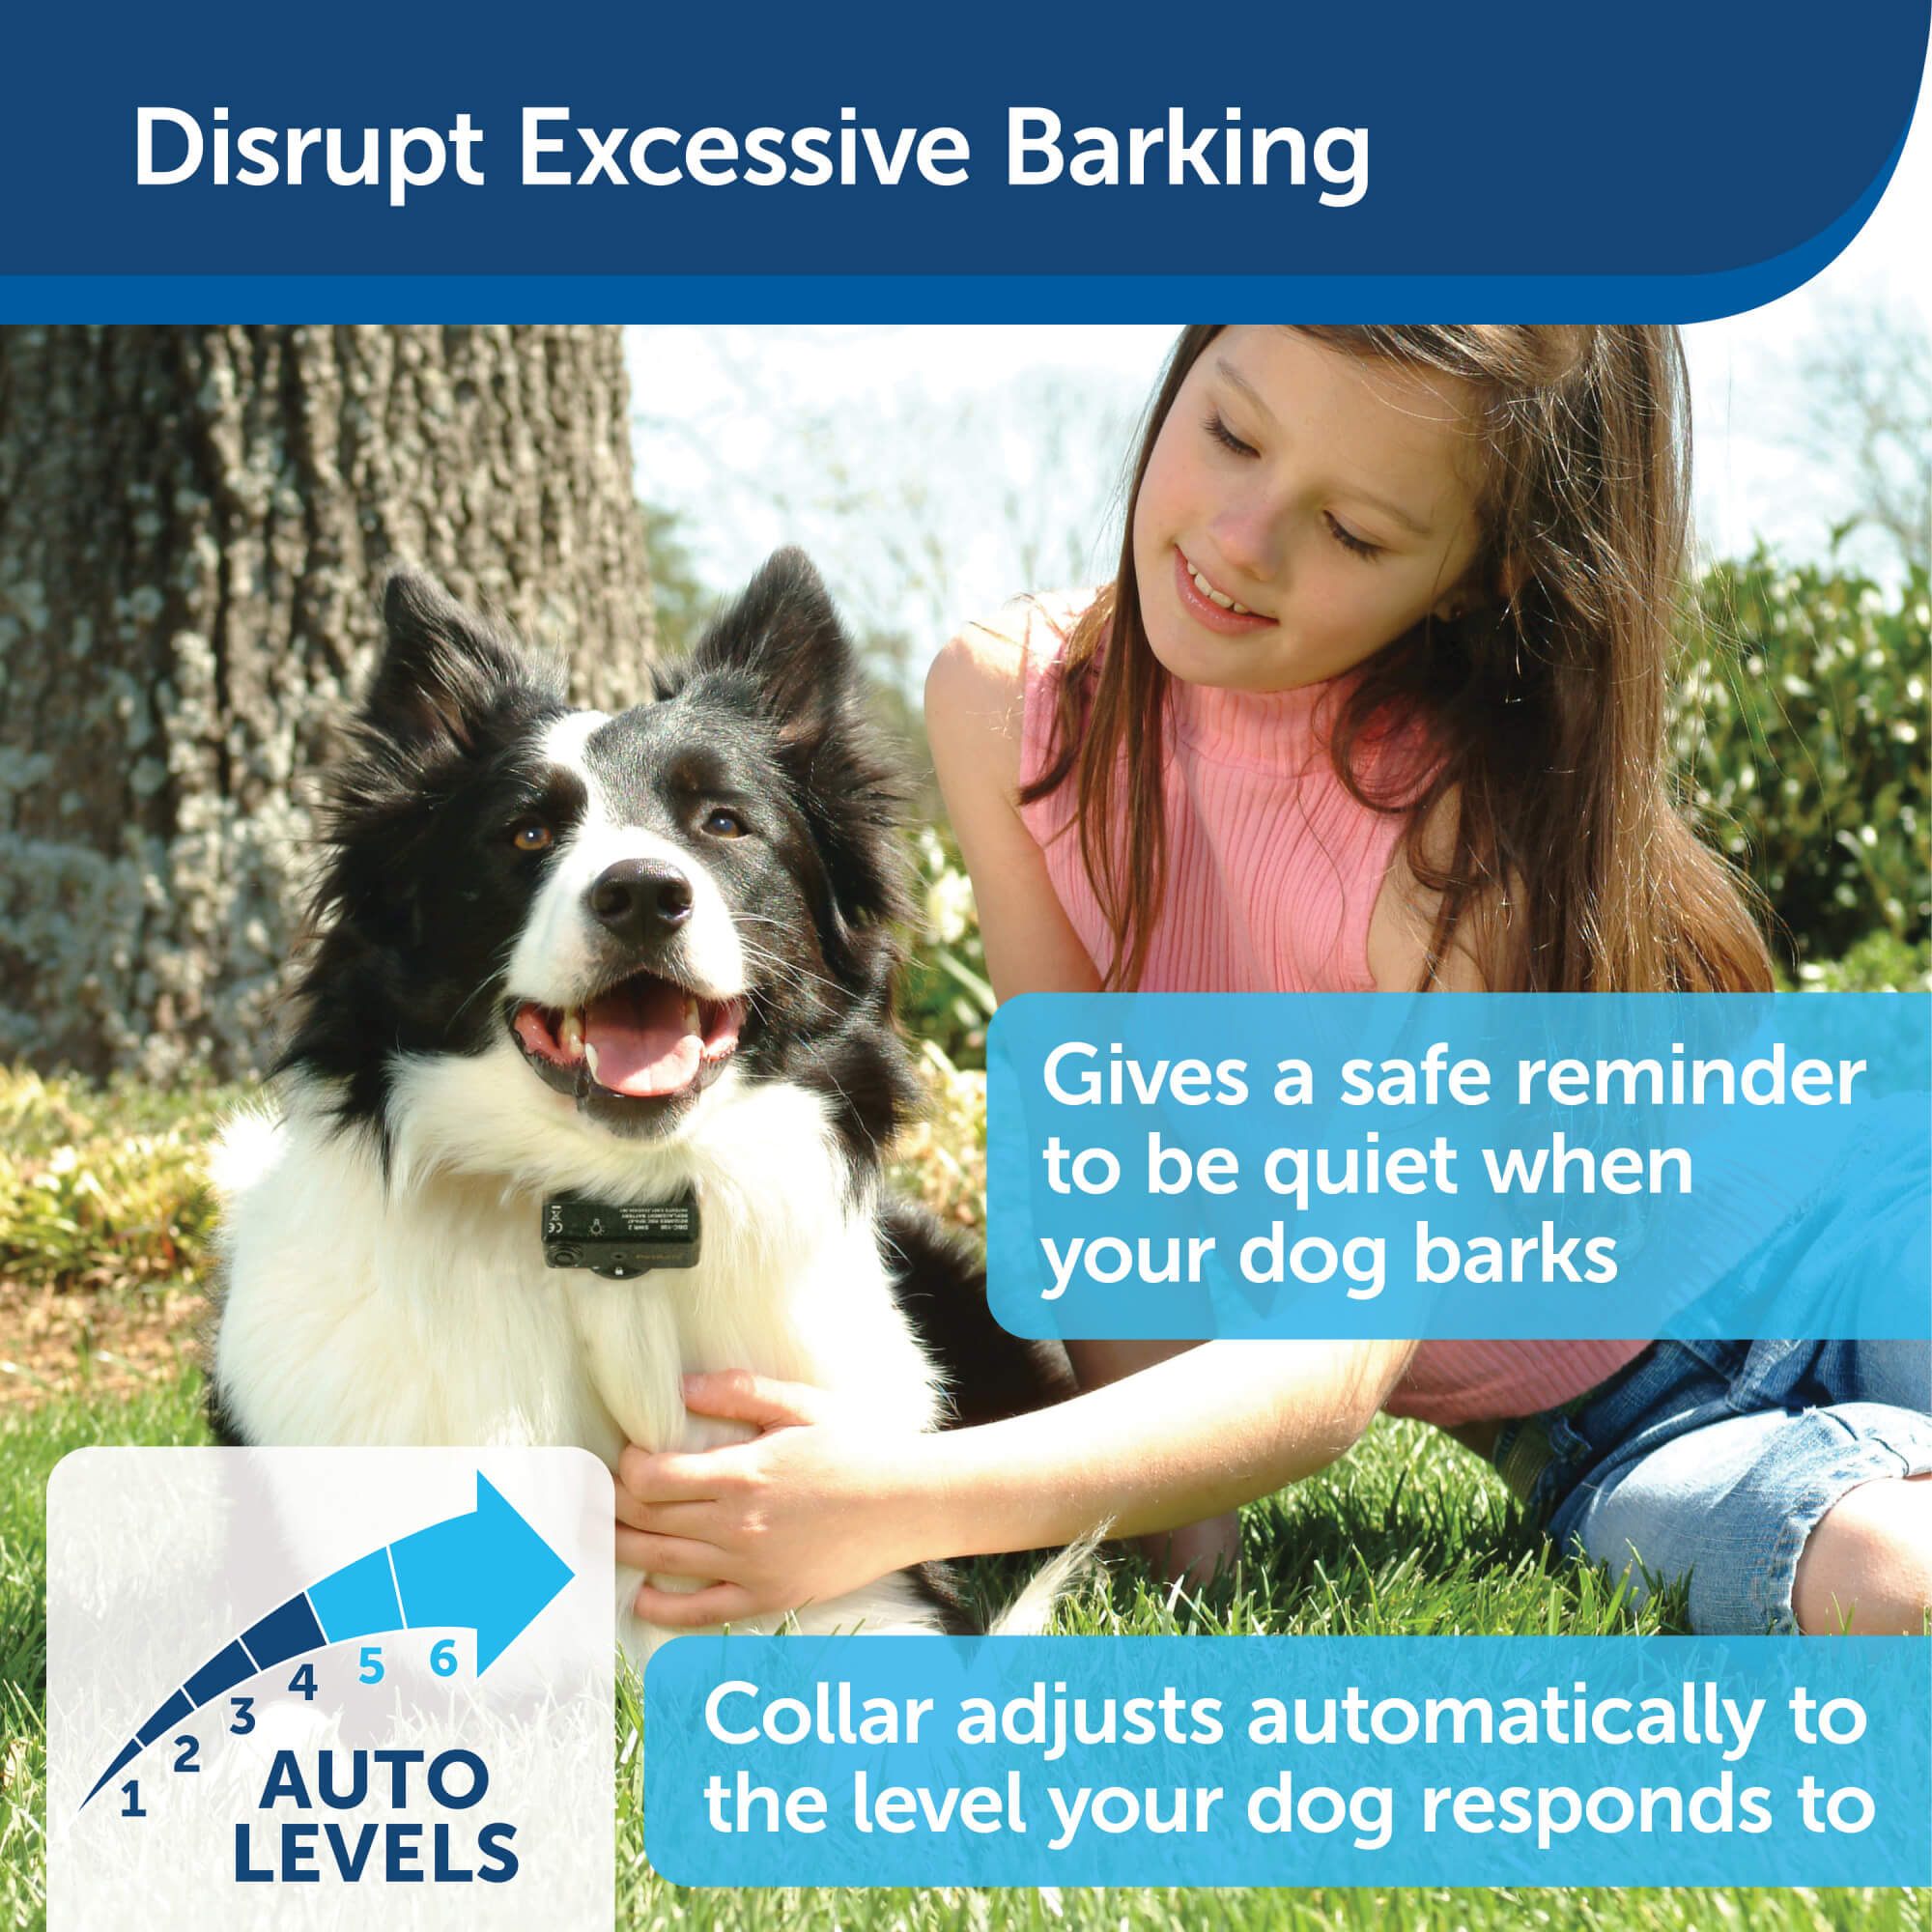 PetSafe Basic Bark Control collar detects your dog's bark and adjusts